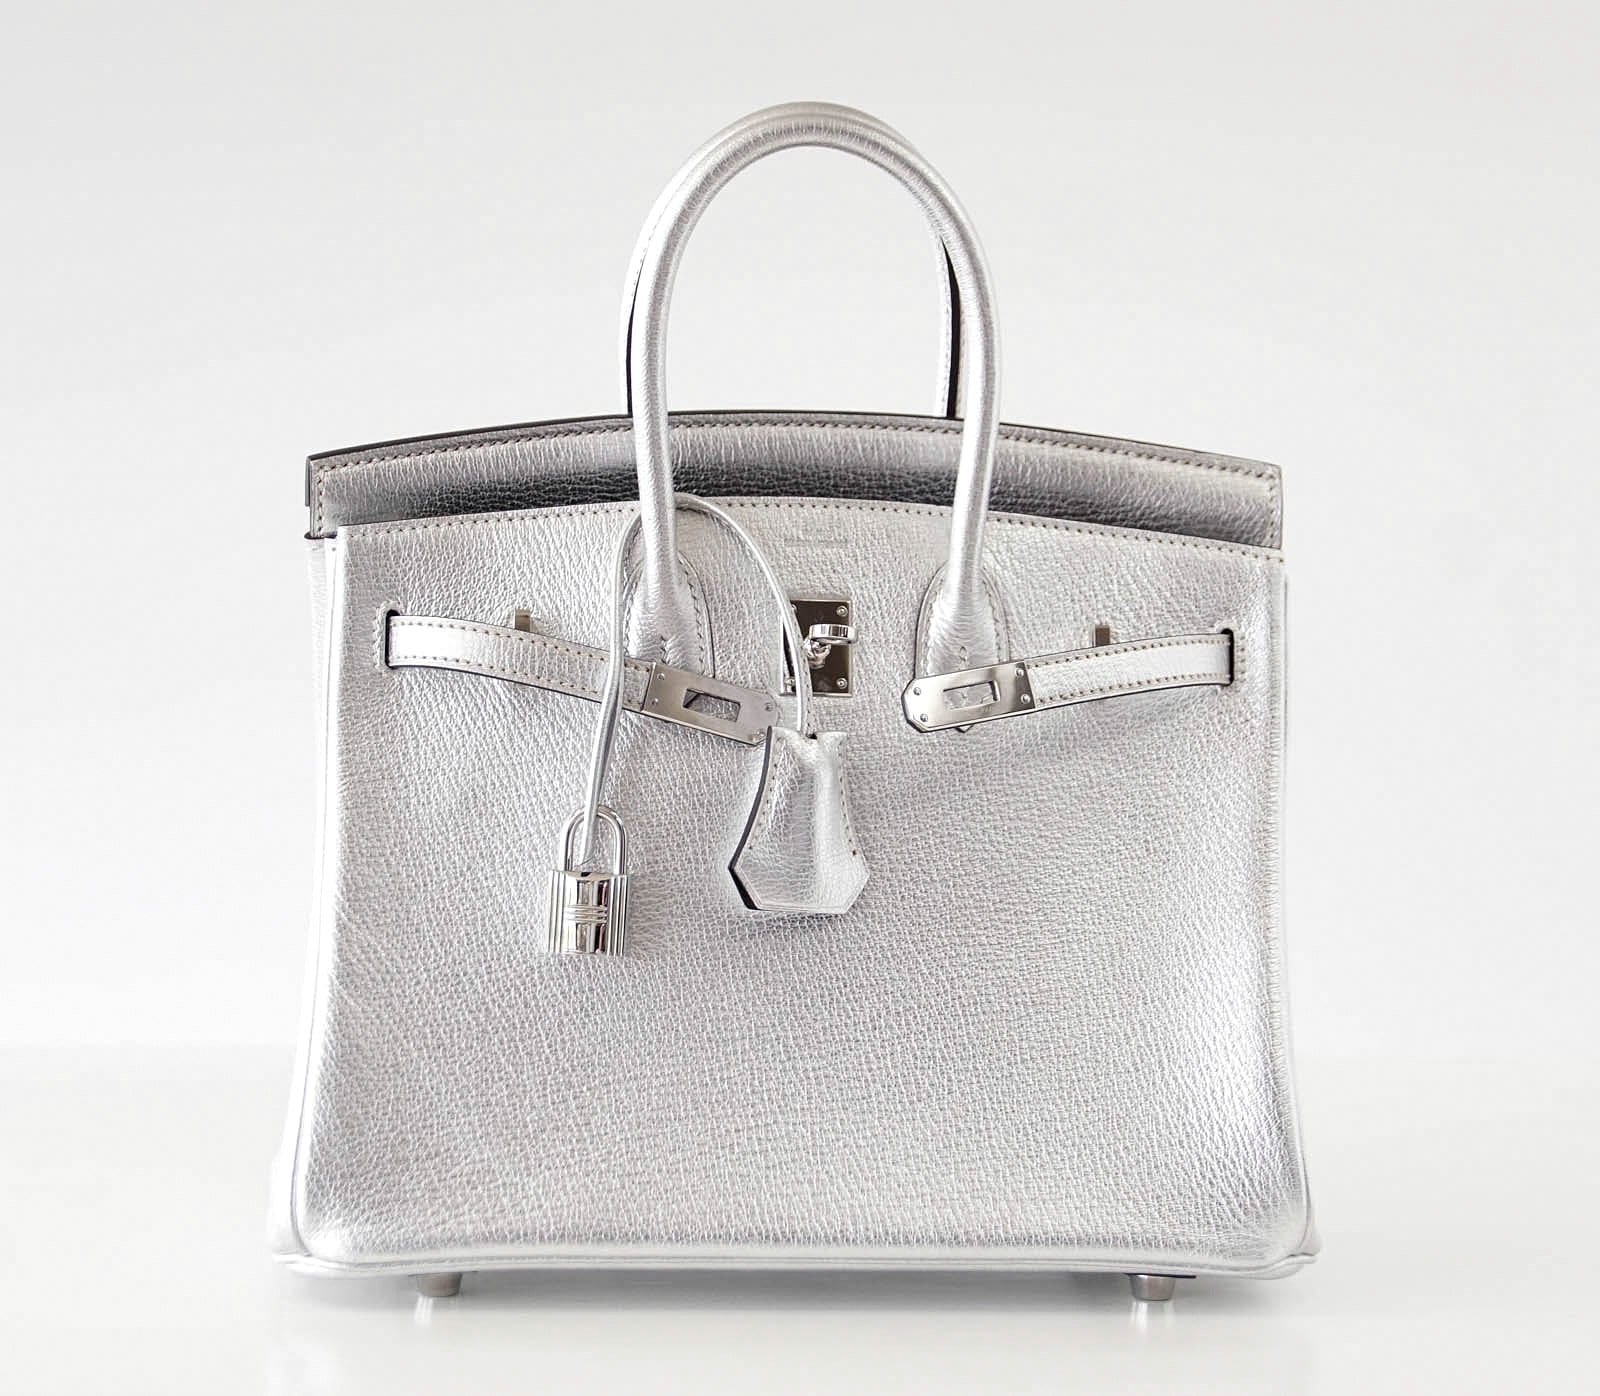 Hermès Authenticated Birkin 25 Leather Handbag